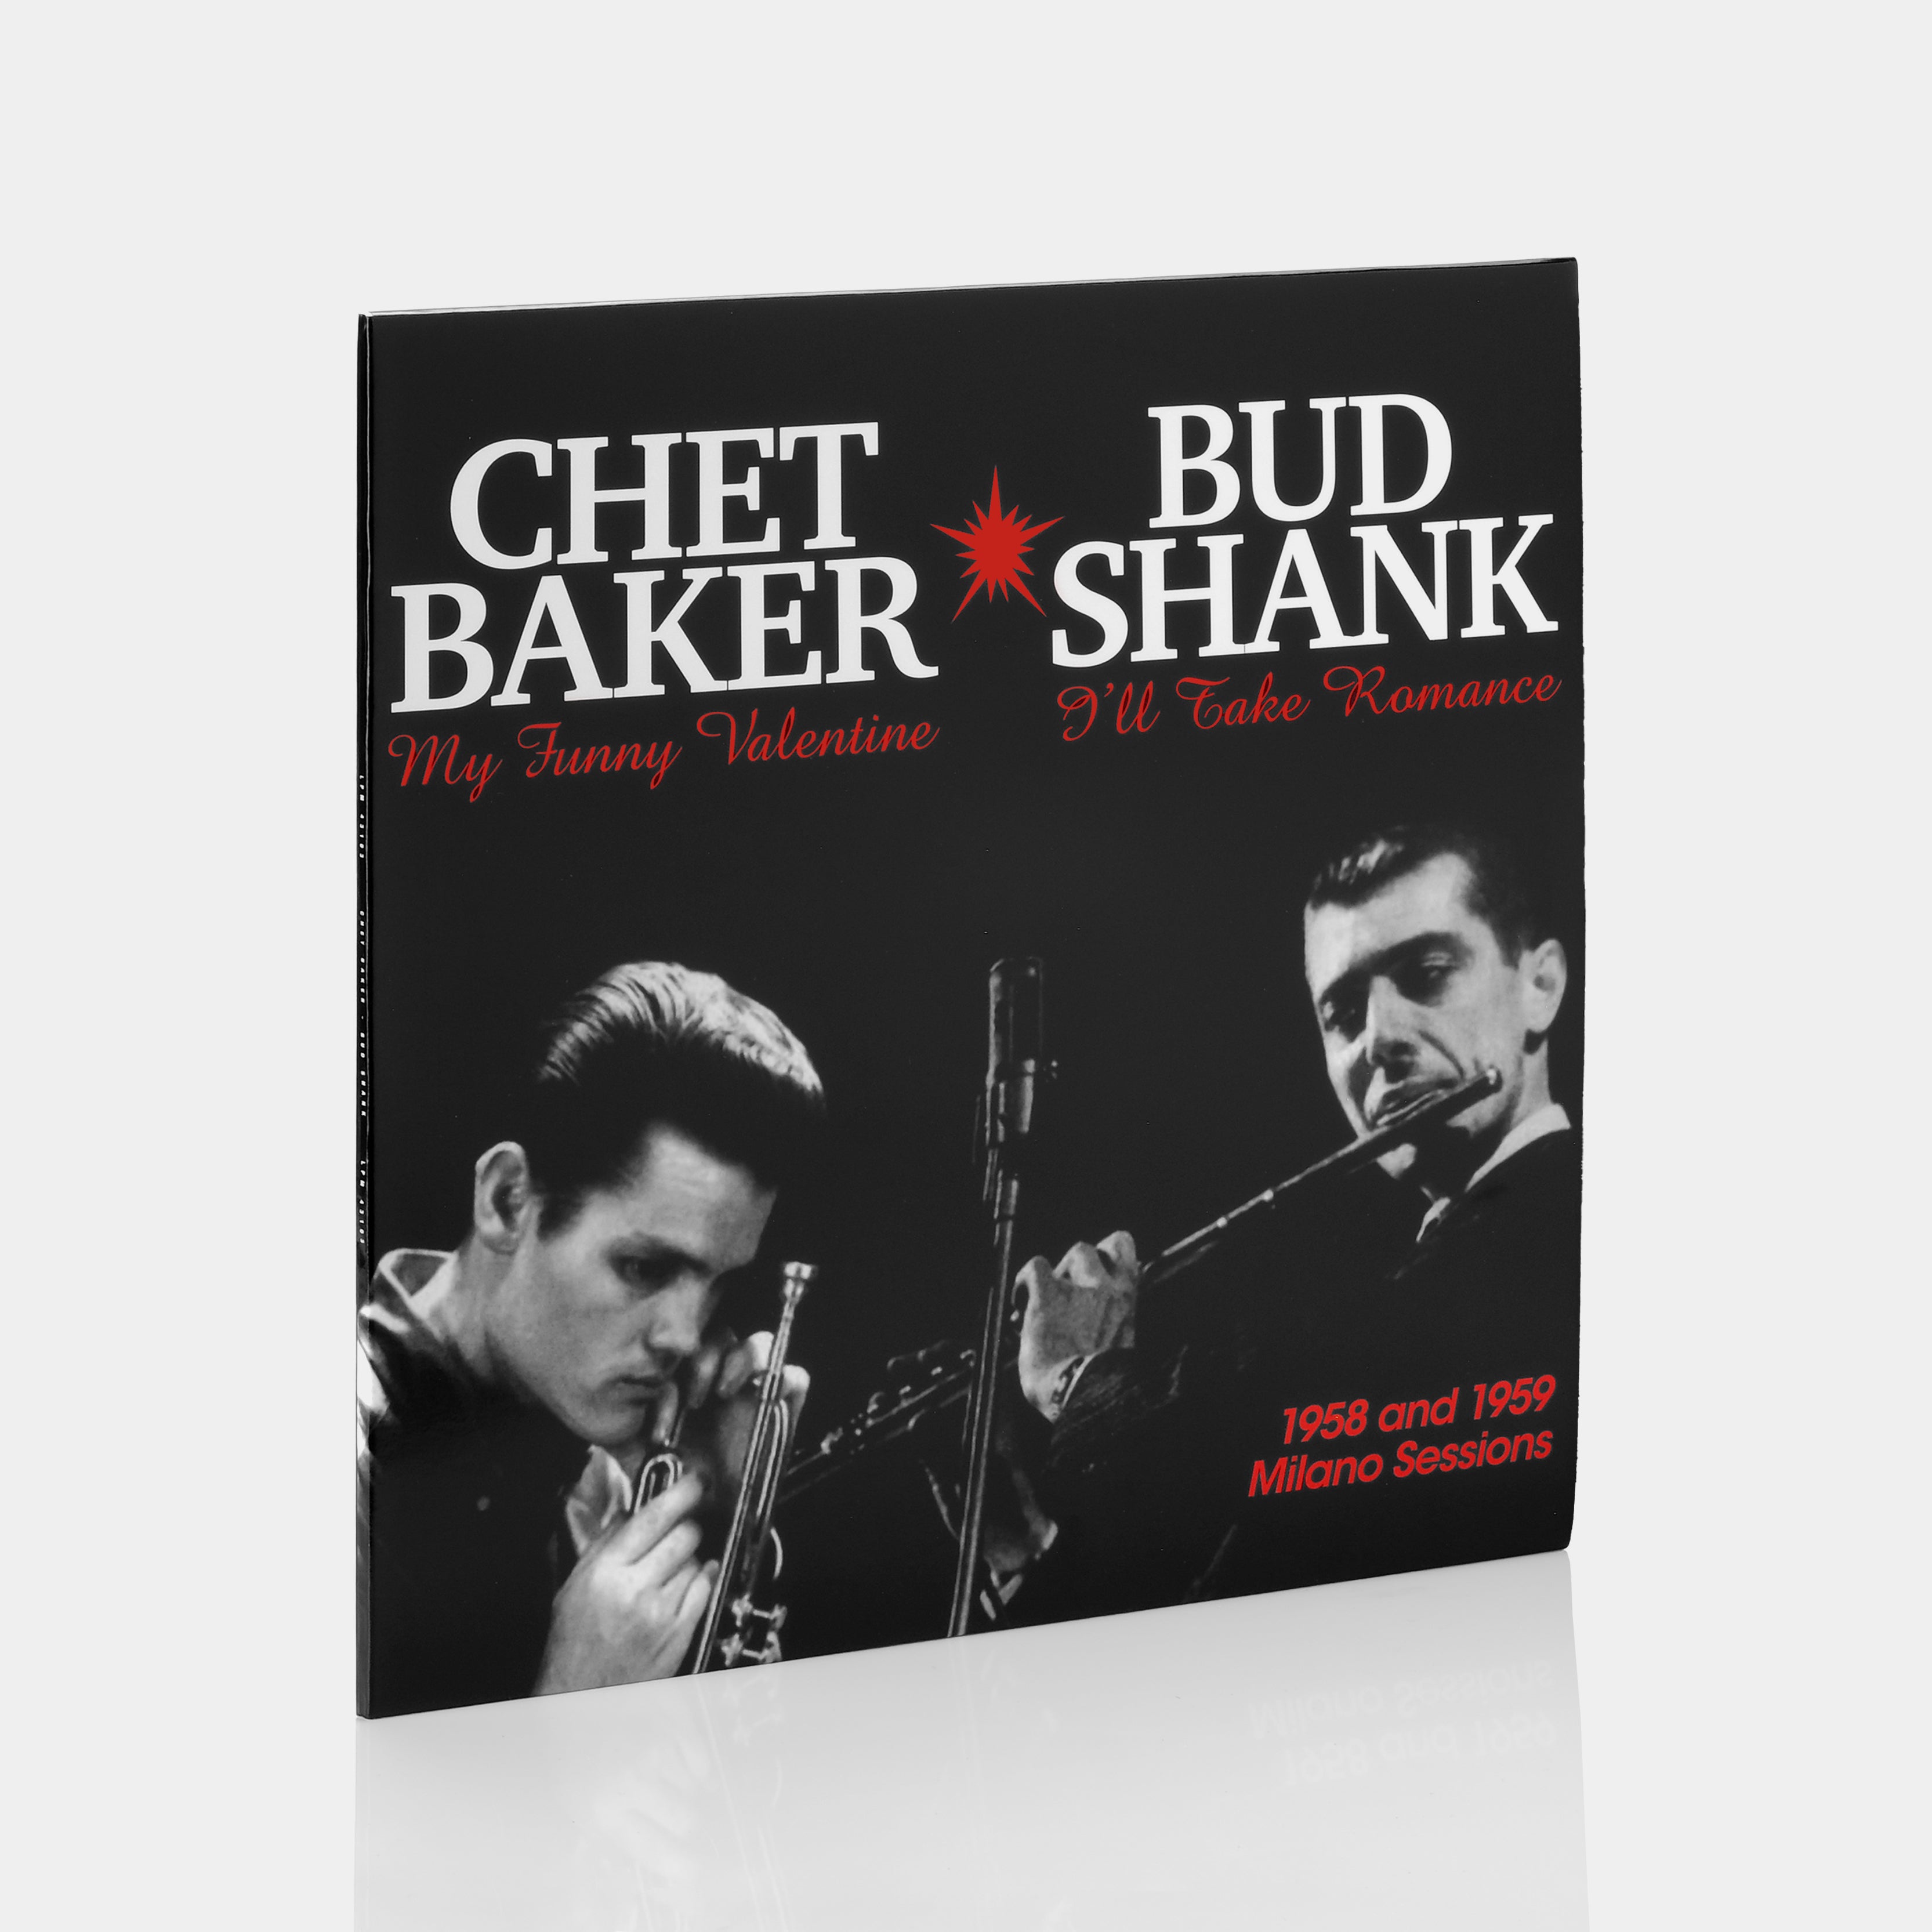 Chet Baker, Bud Shank - 1958 And 1959 Milano Sessions LP Vinyl Record